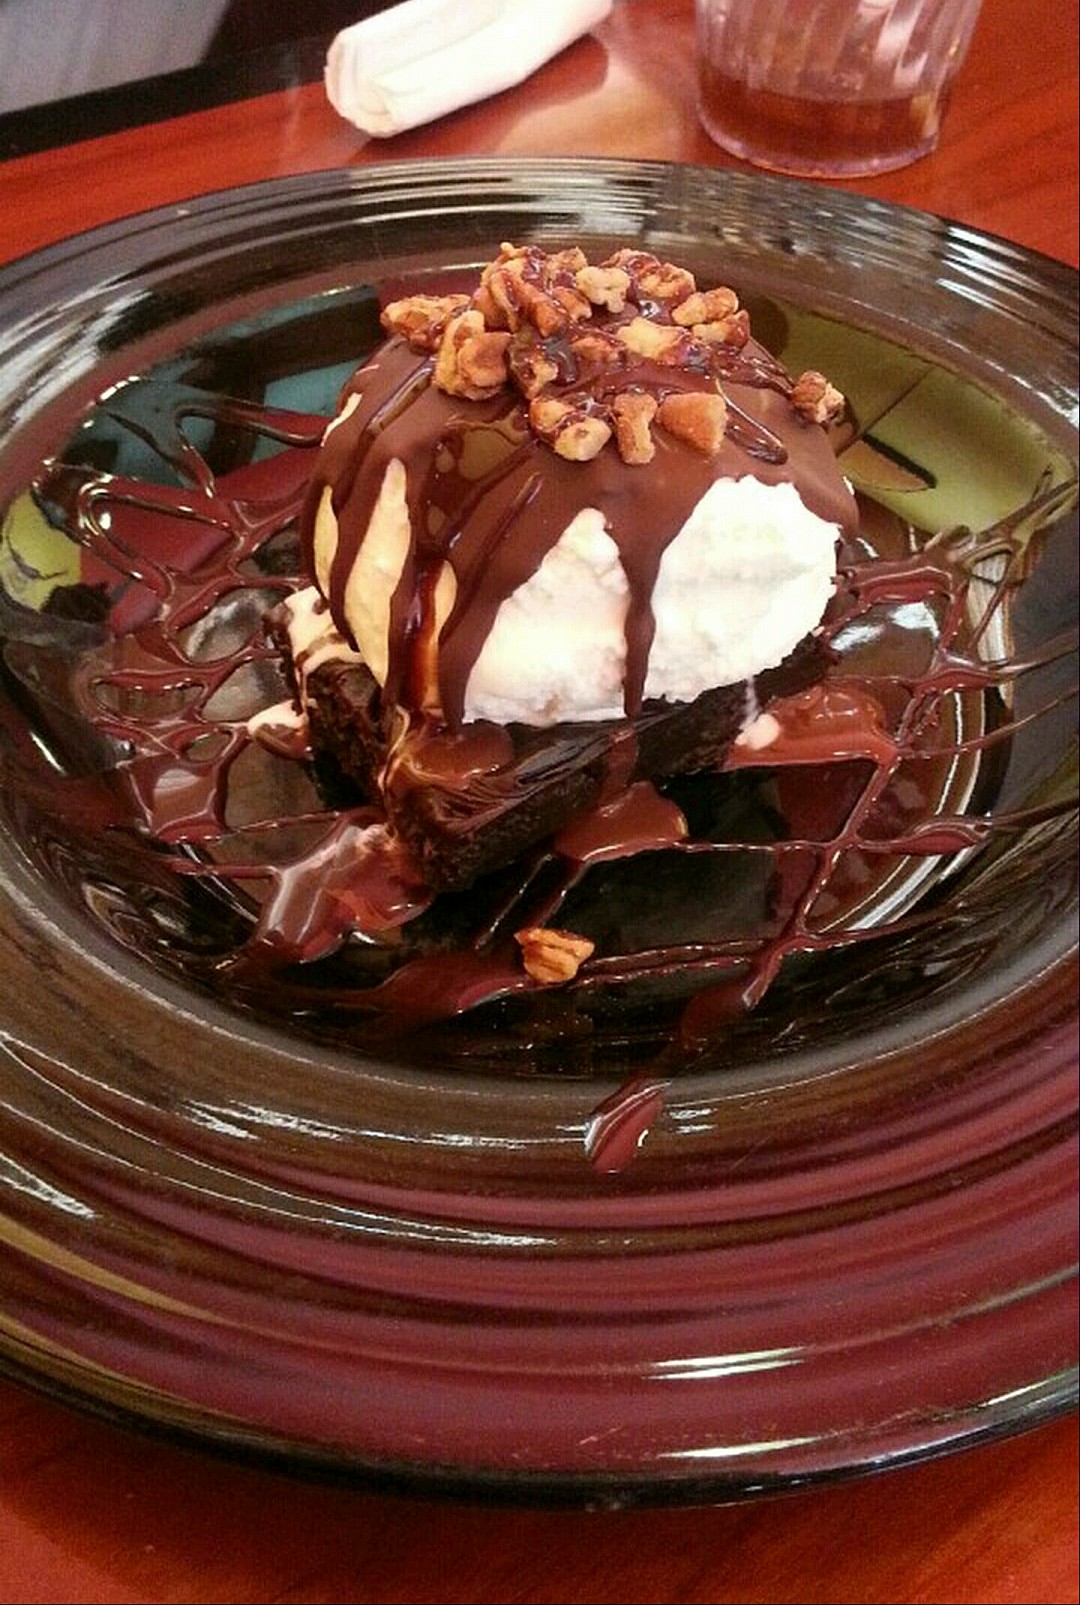 Chocolate brownie with ice cream @ Fuddruckers - Bahrain